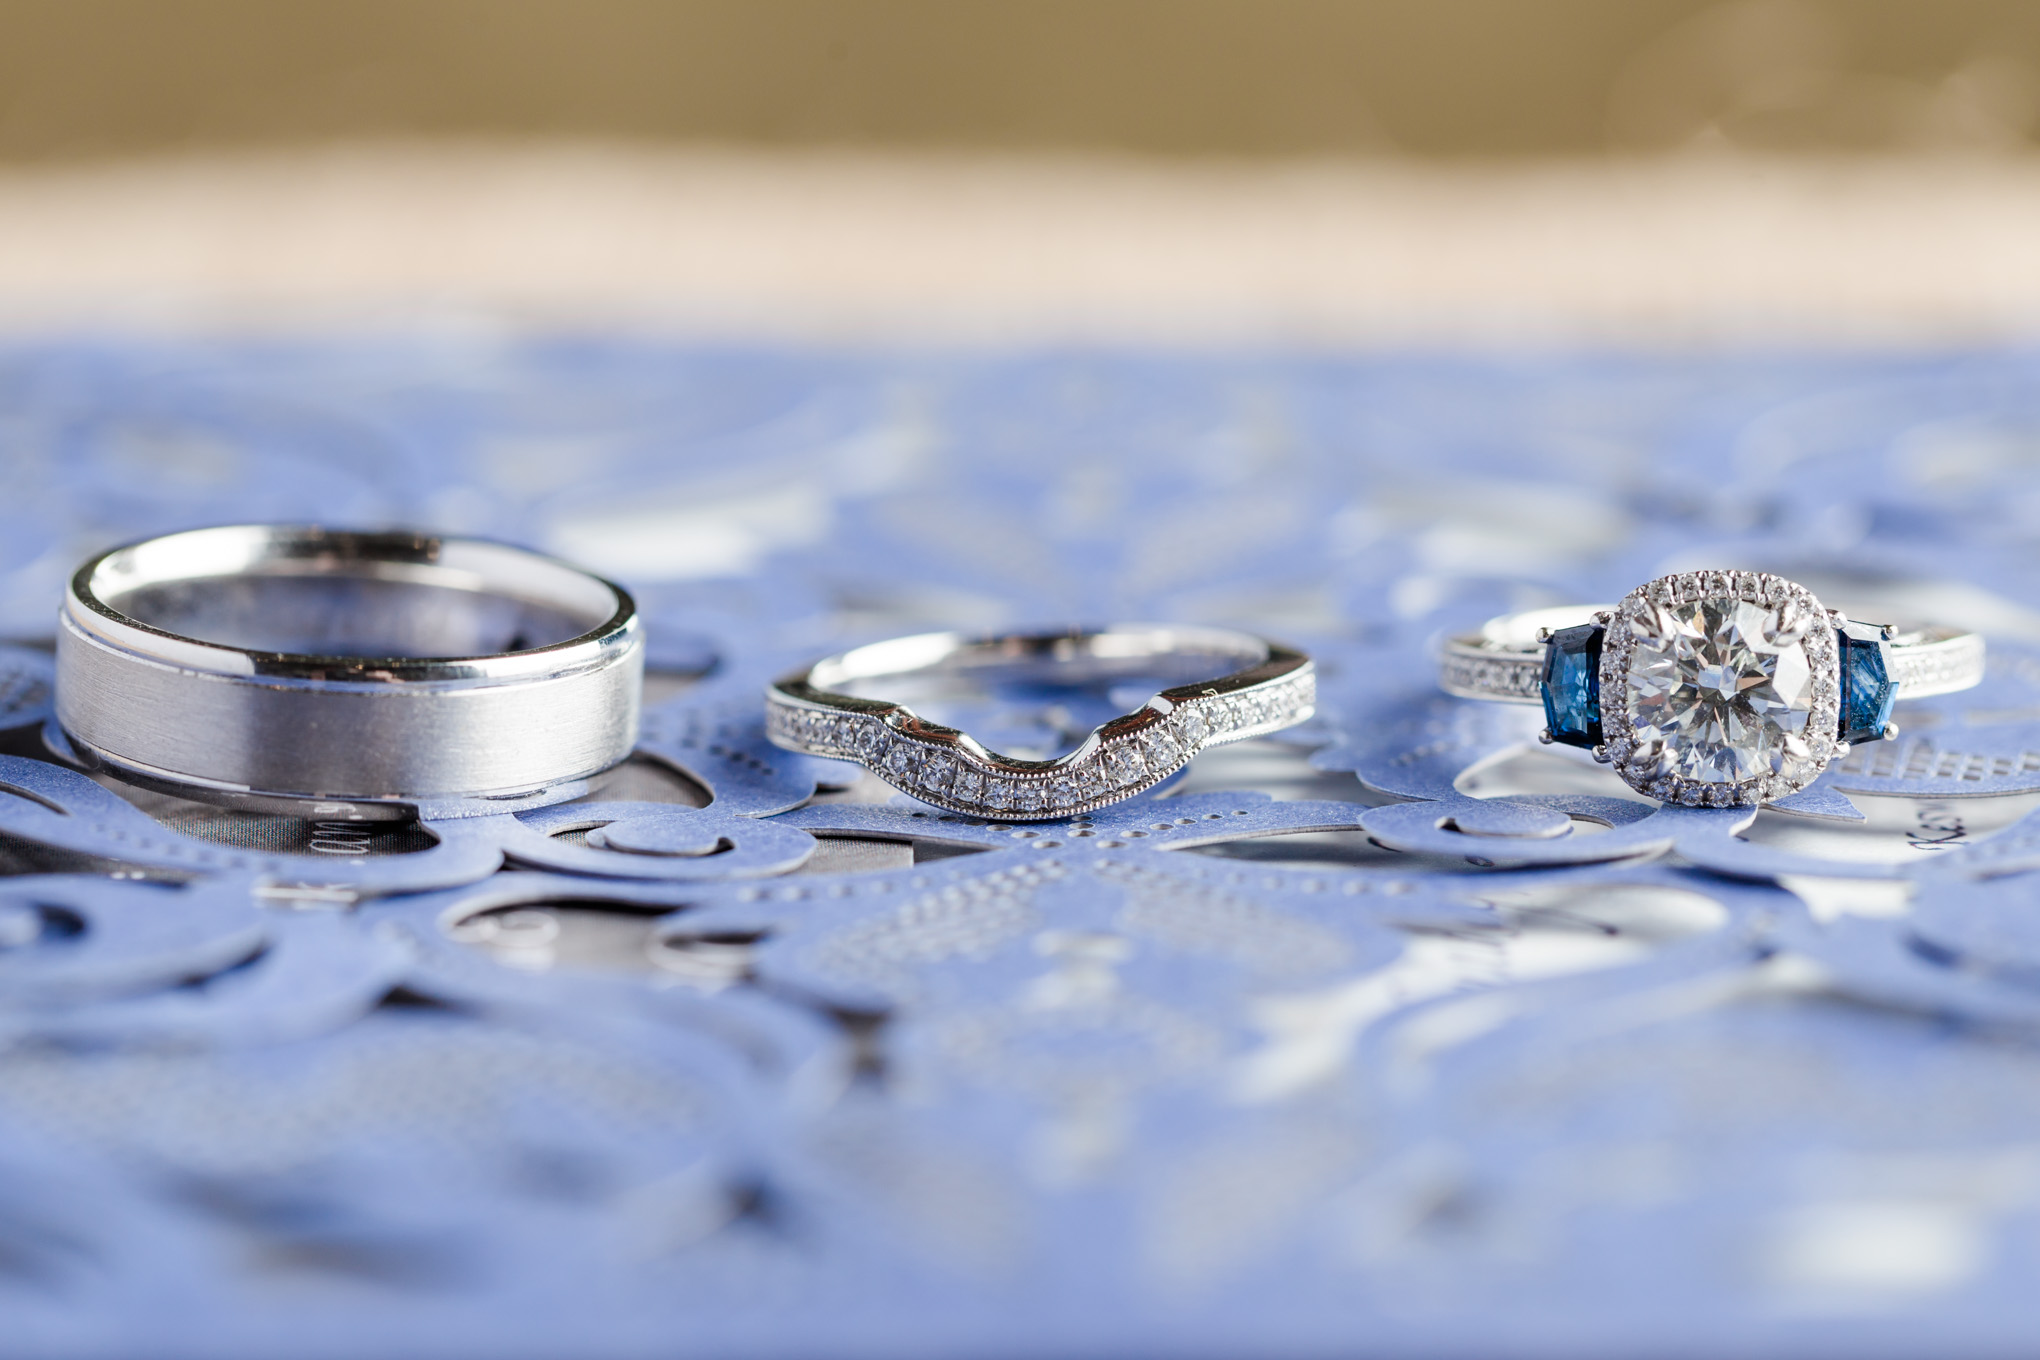 Keswick Vineyards summer wedding, Ascot Diamonds, wedding bands, sapphire and diamond engagement ring